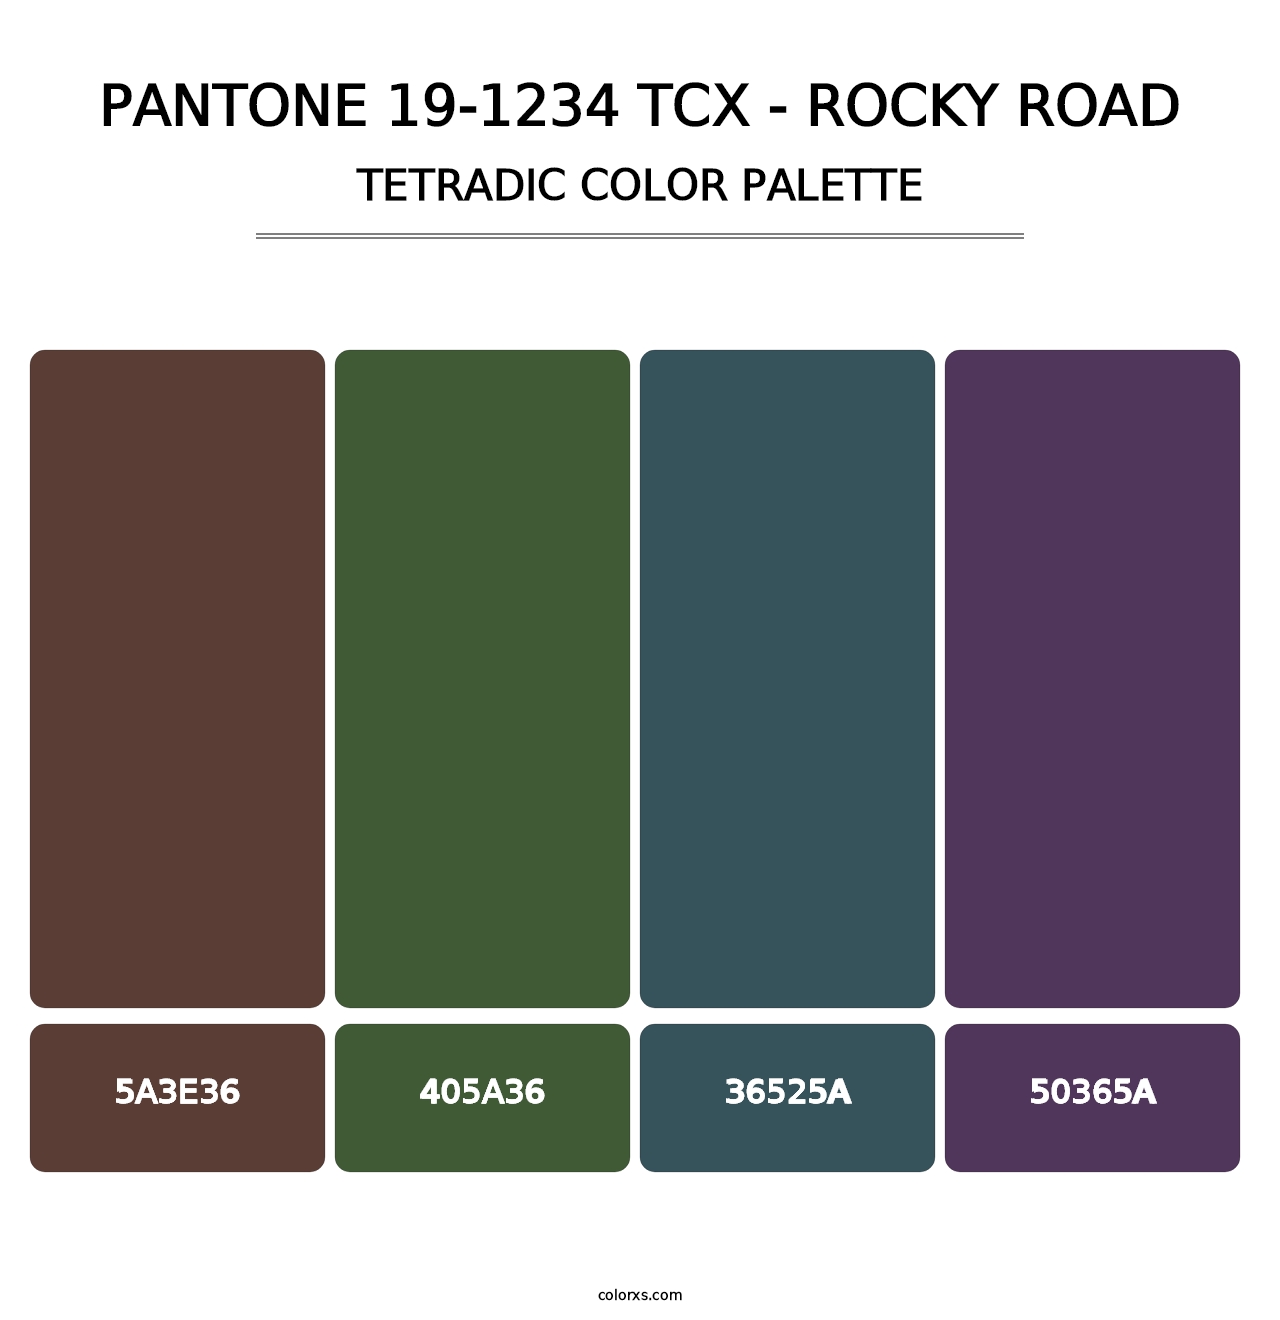 PANTONE 19-1234 TCX - Rocky Road - Tetradic Color Palette